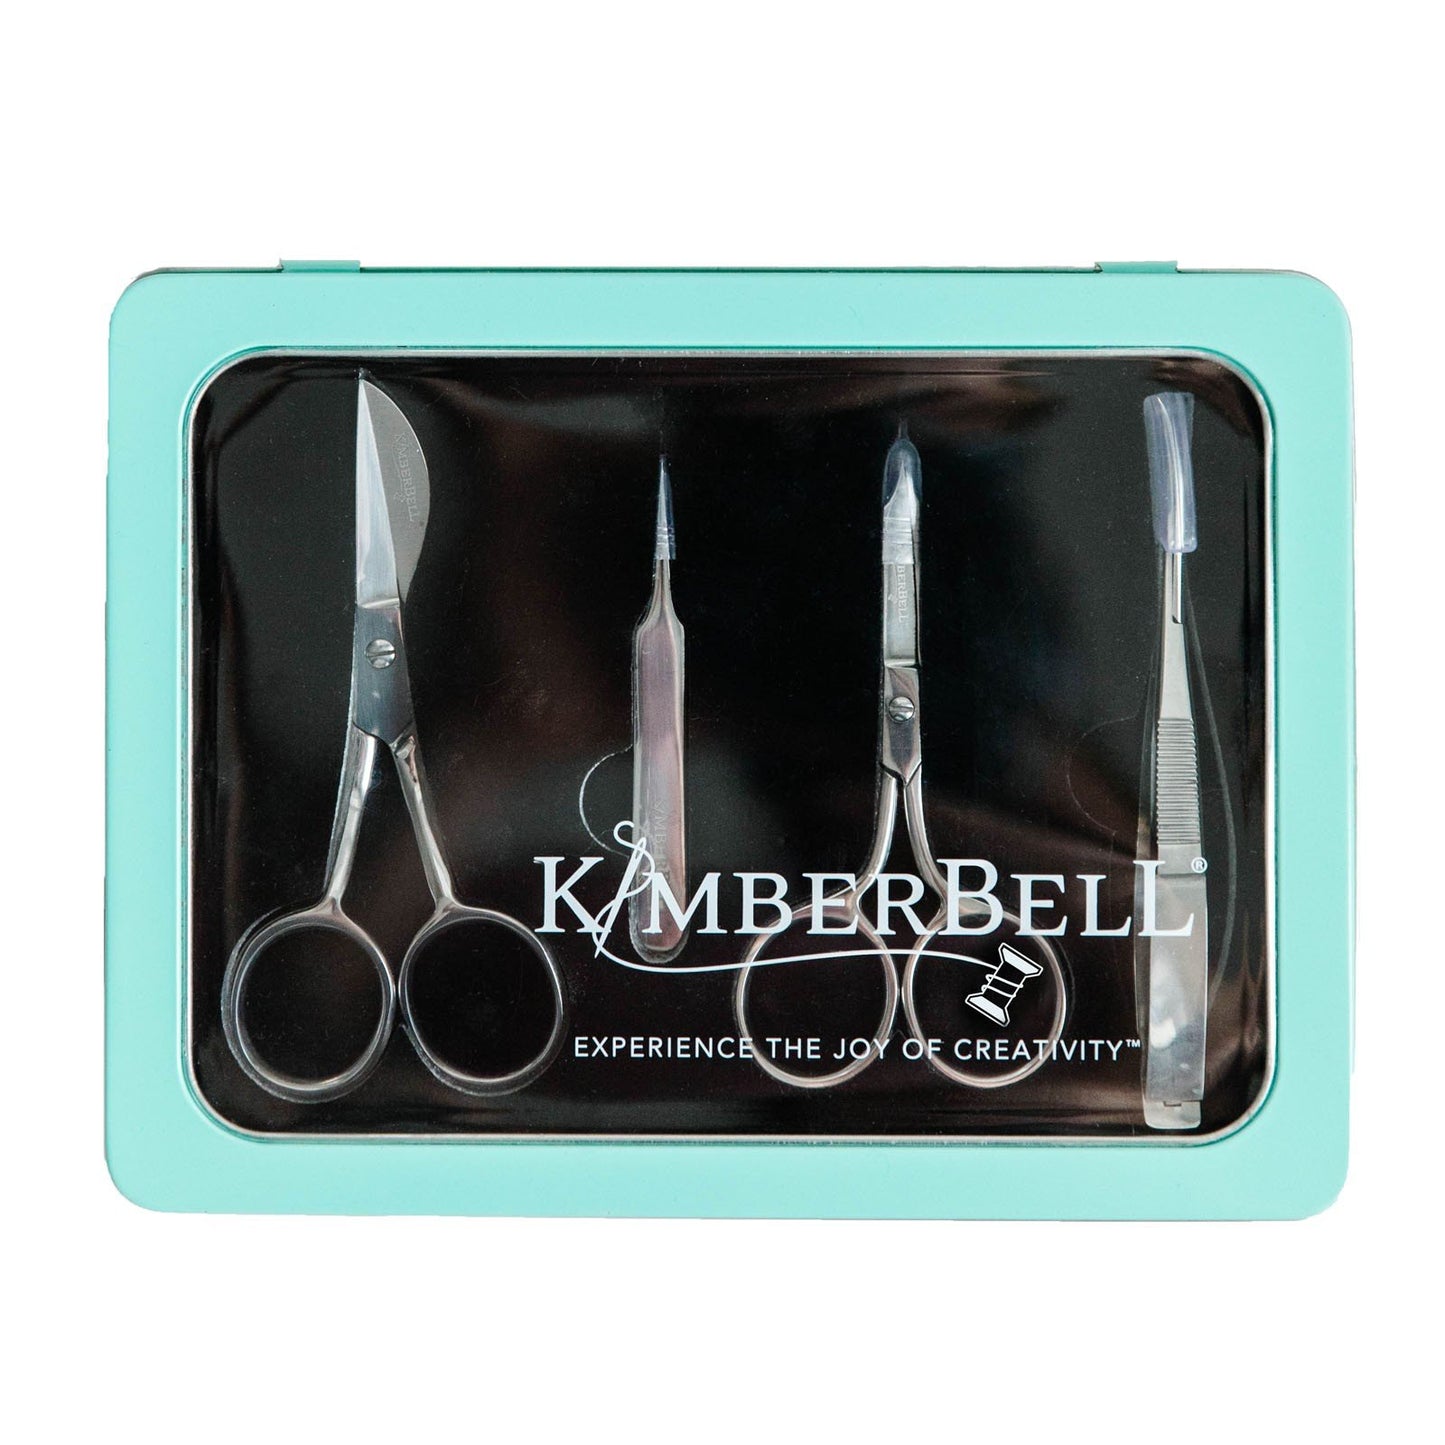 Kimberbell's Embroidery Tool Set